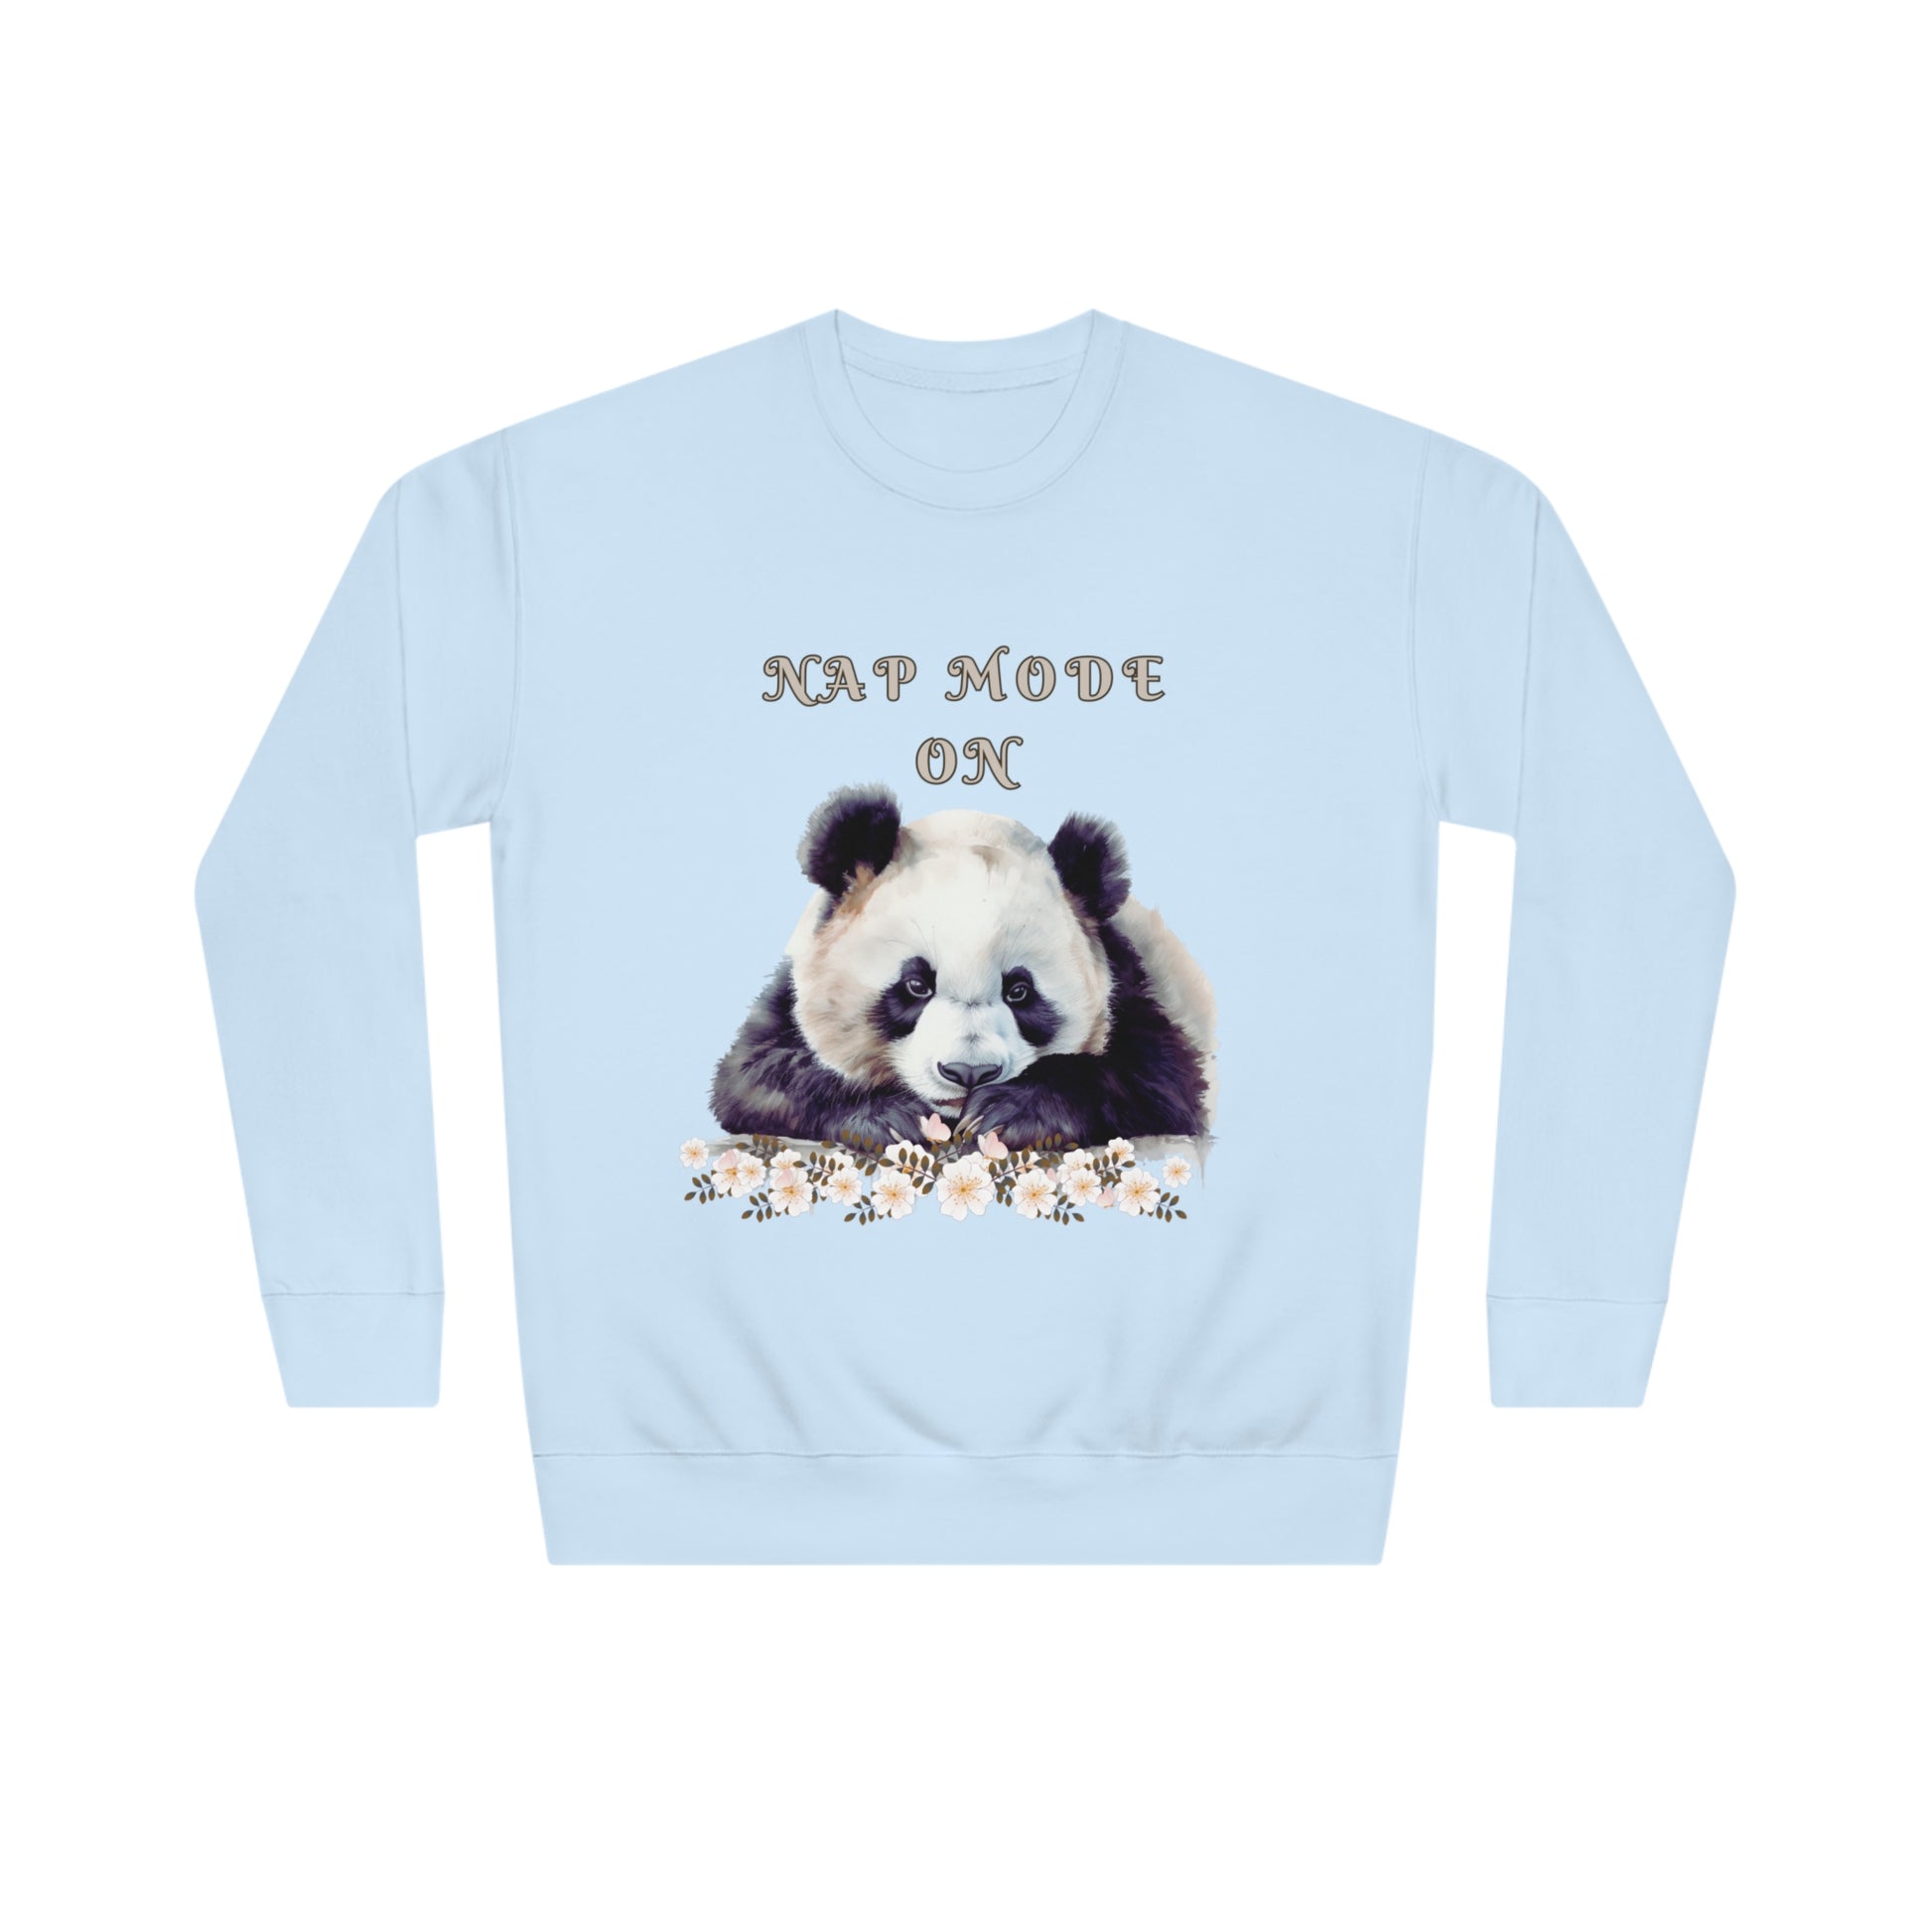 Lazy Panda Nap Mode Sweatshirt | Embrace Cozy Relaxation | Panda Lover Gift - Cozy Sweatshirt Sweatshirt Sky Blue L 